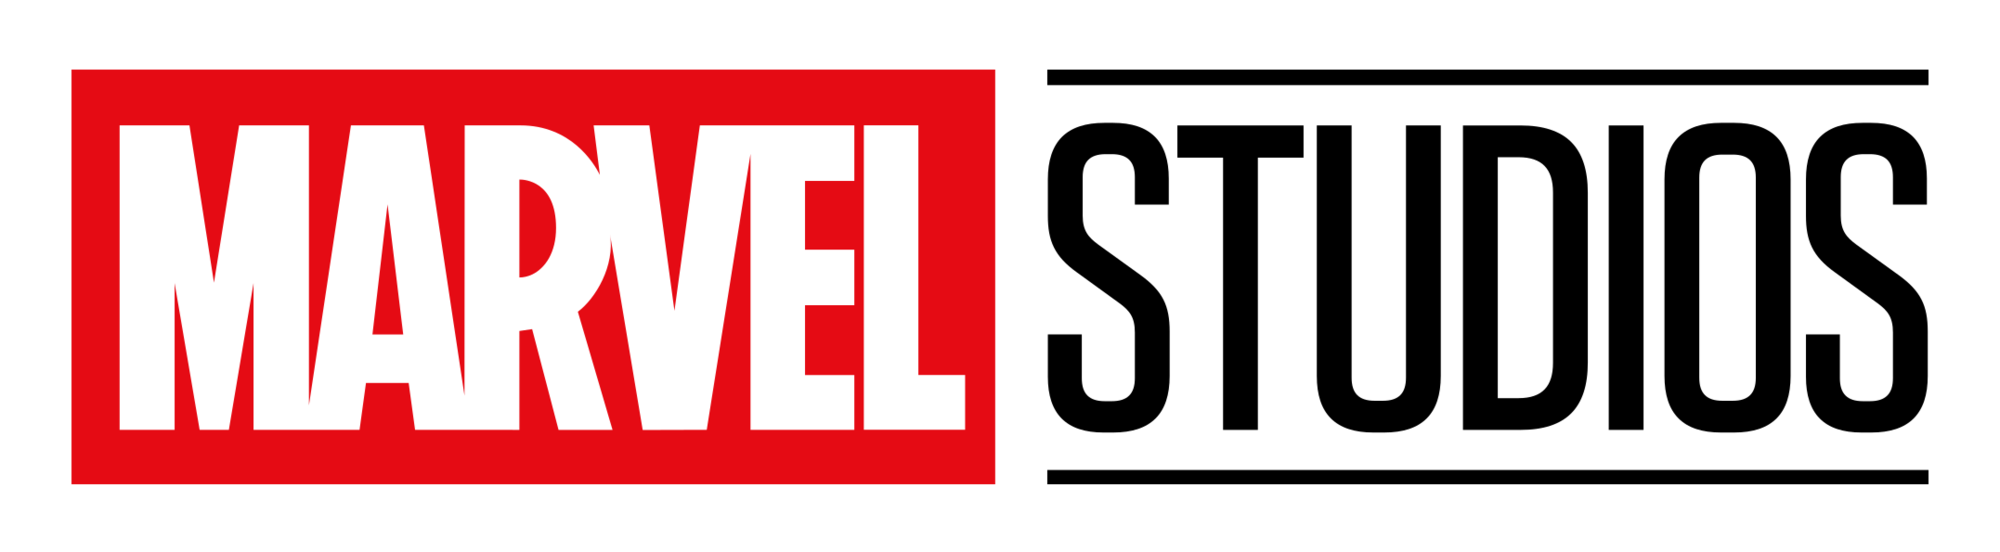 Marvel_Studios_logo_2016.png